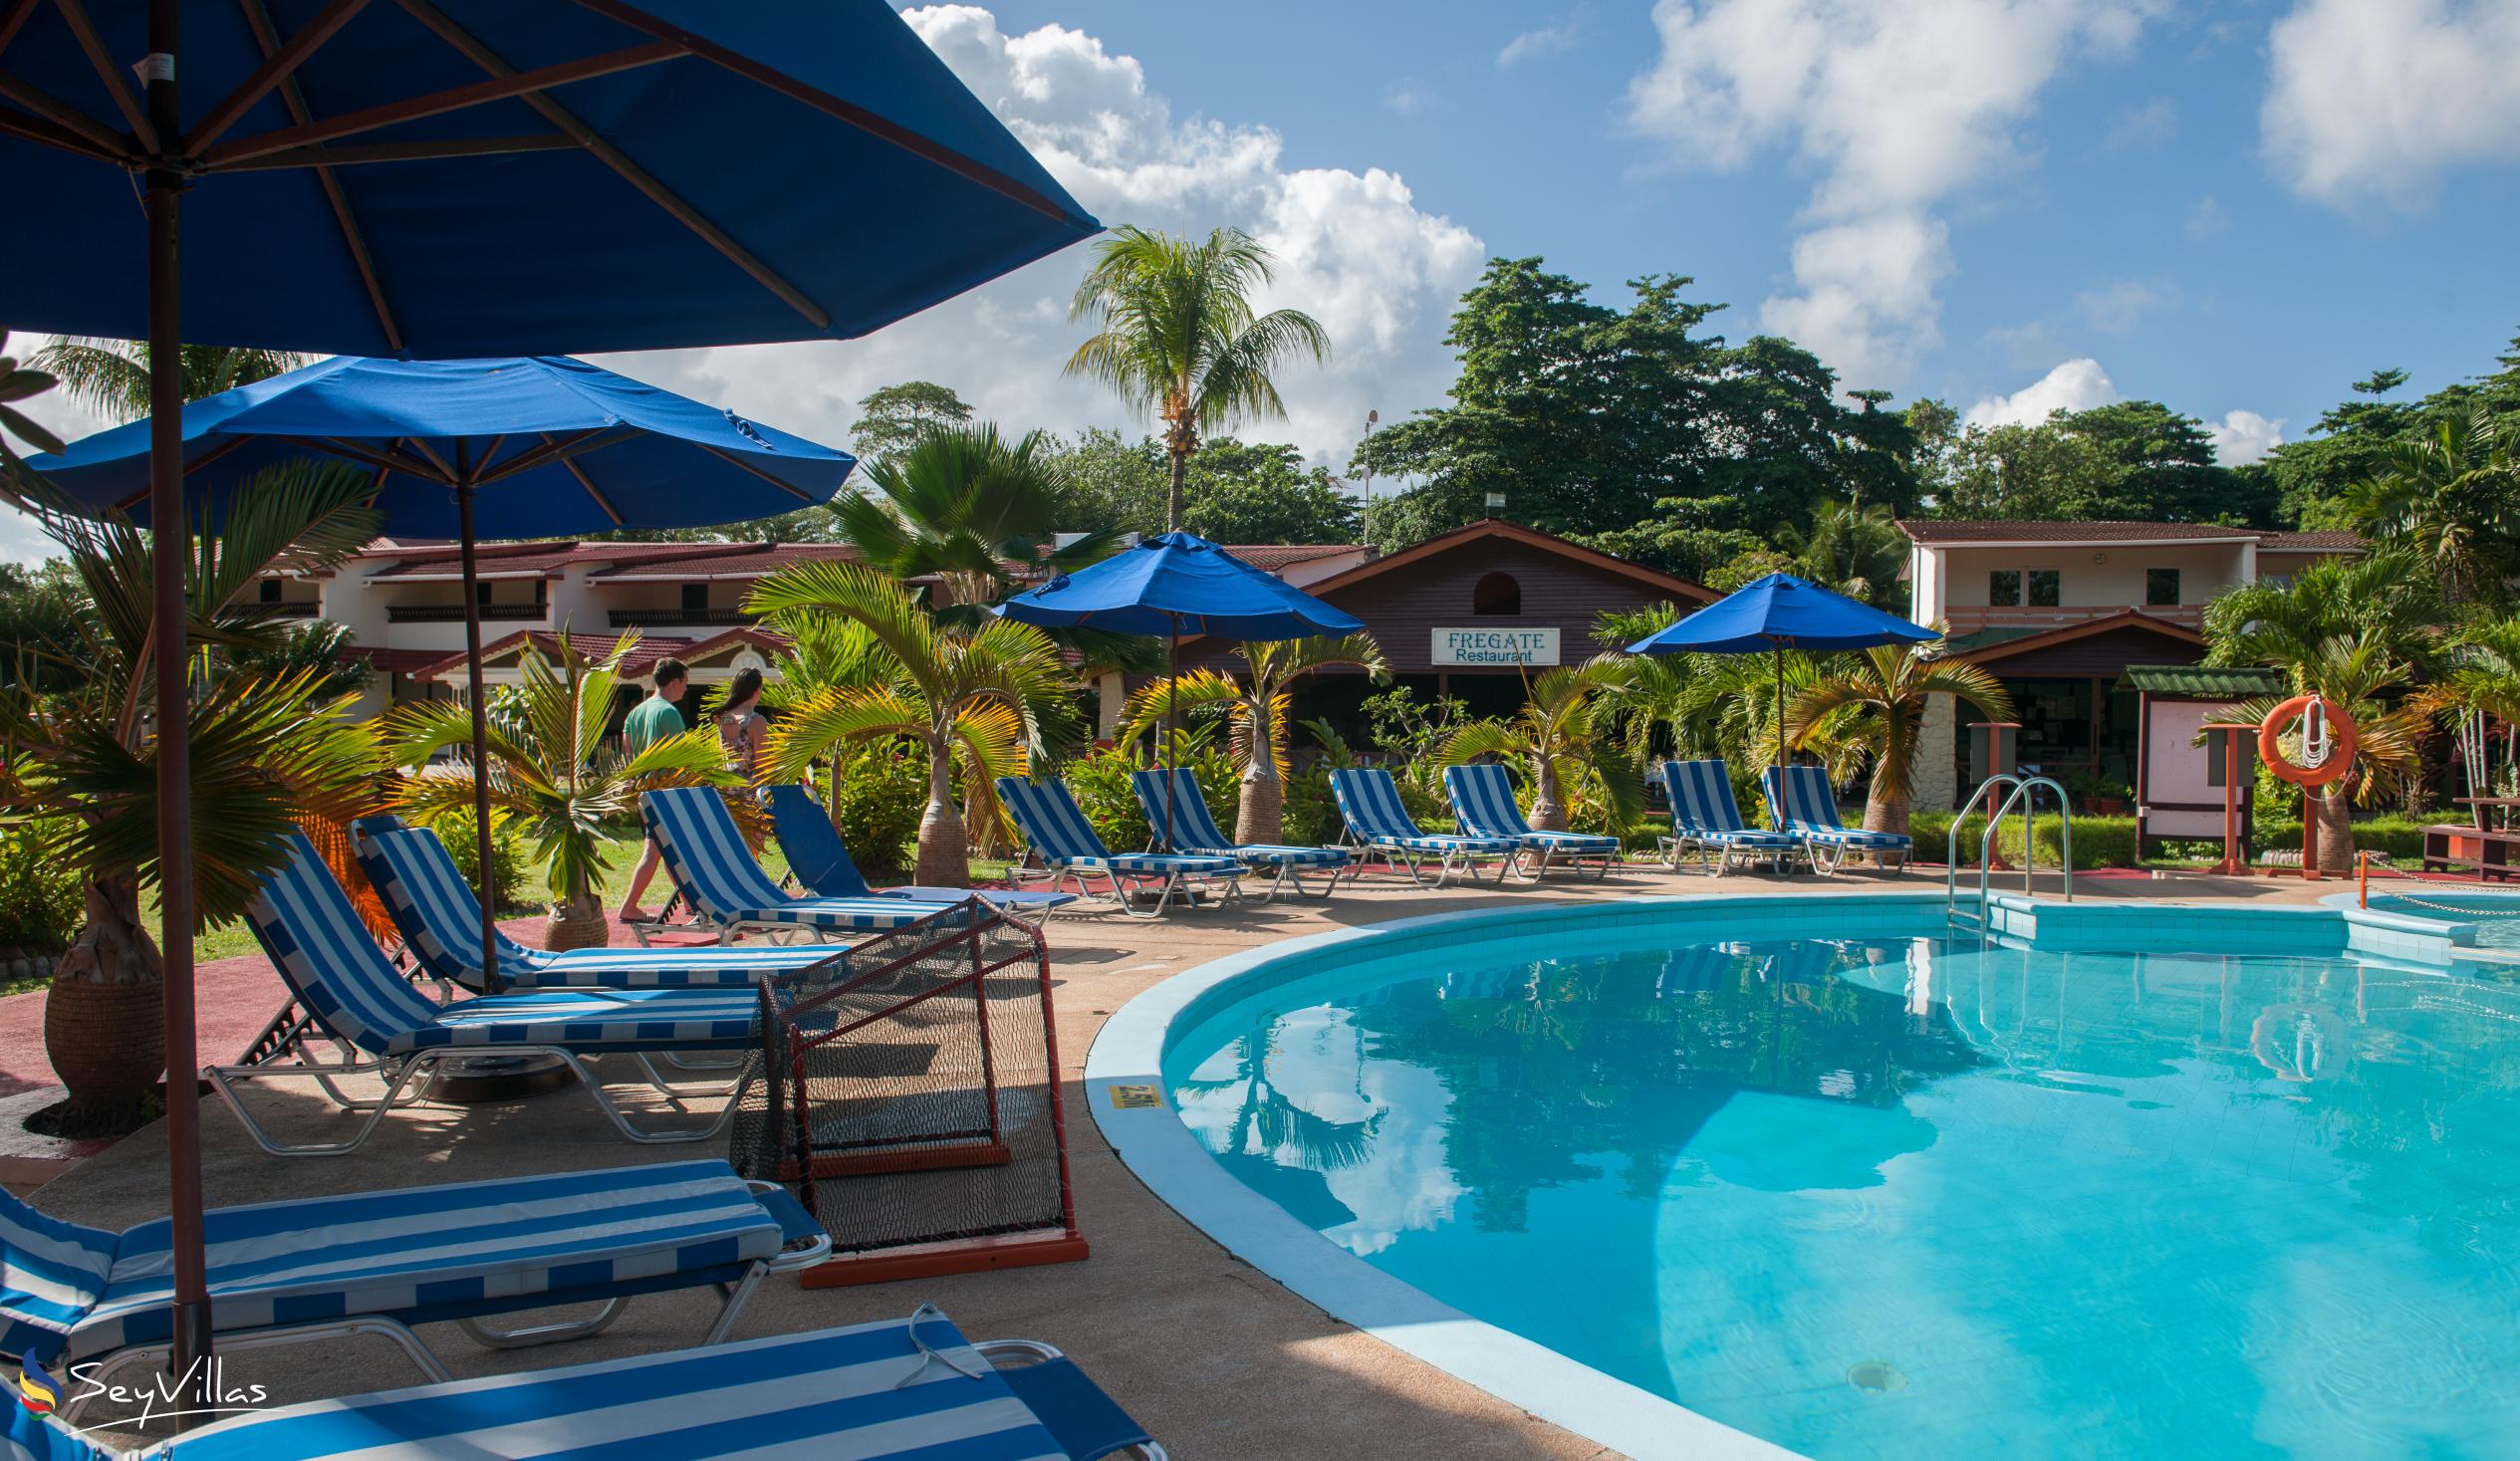 Photo 4: Berjaya Praslin Resort - Outdoor area - Praslin (Seychelles)